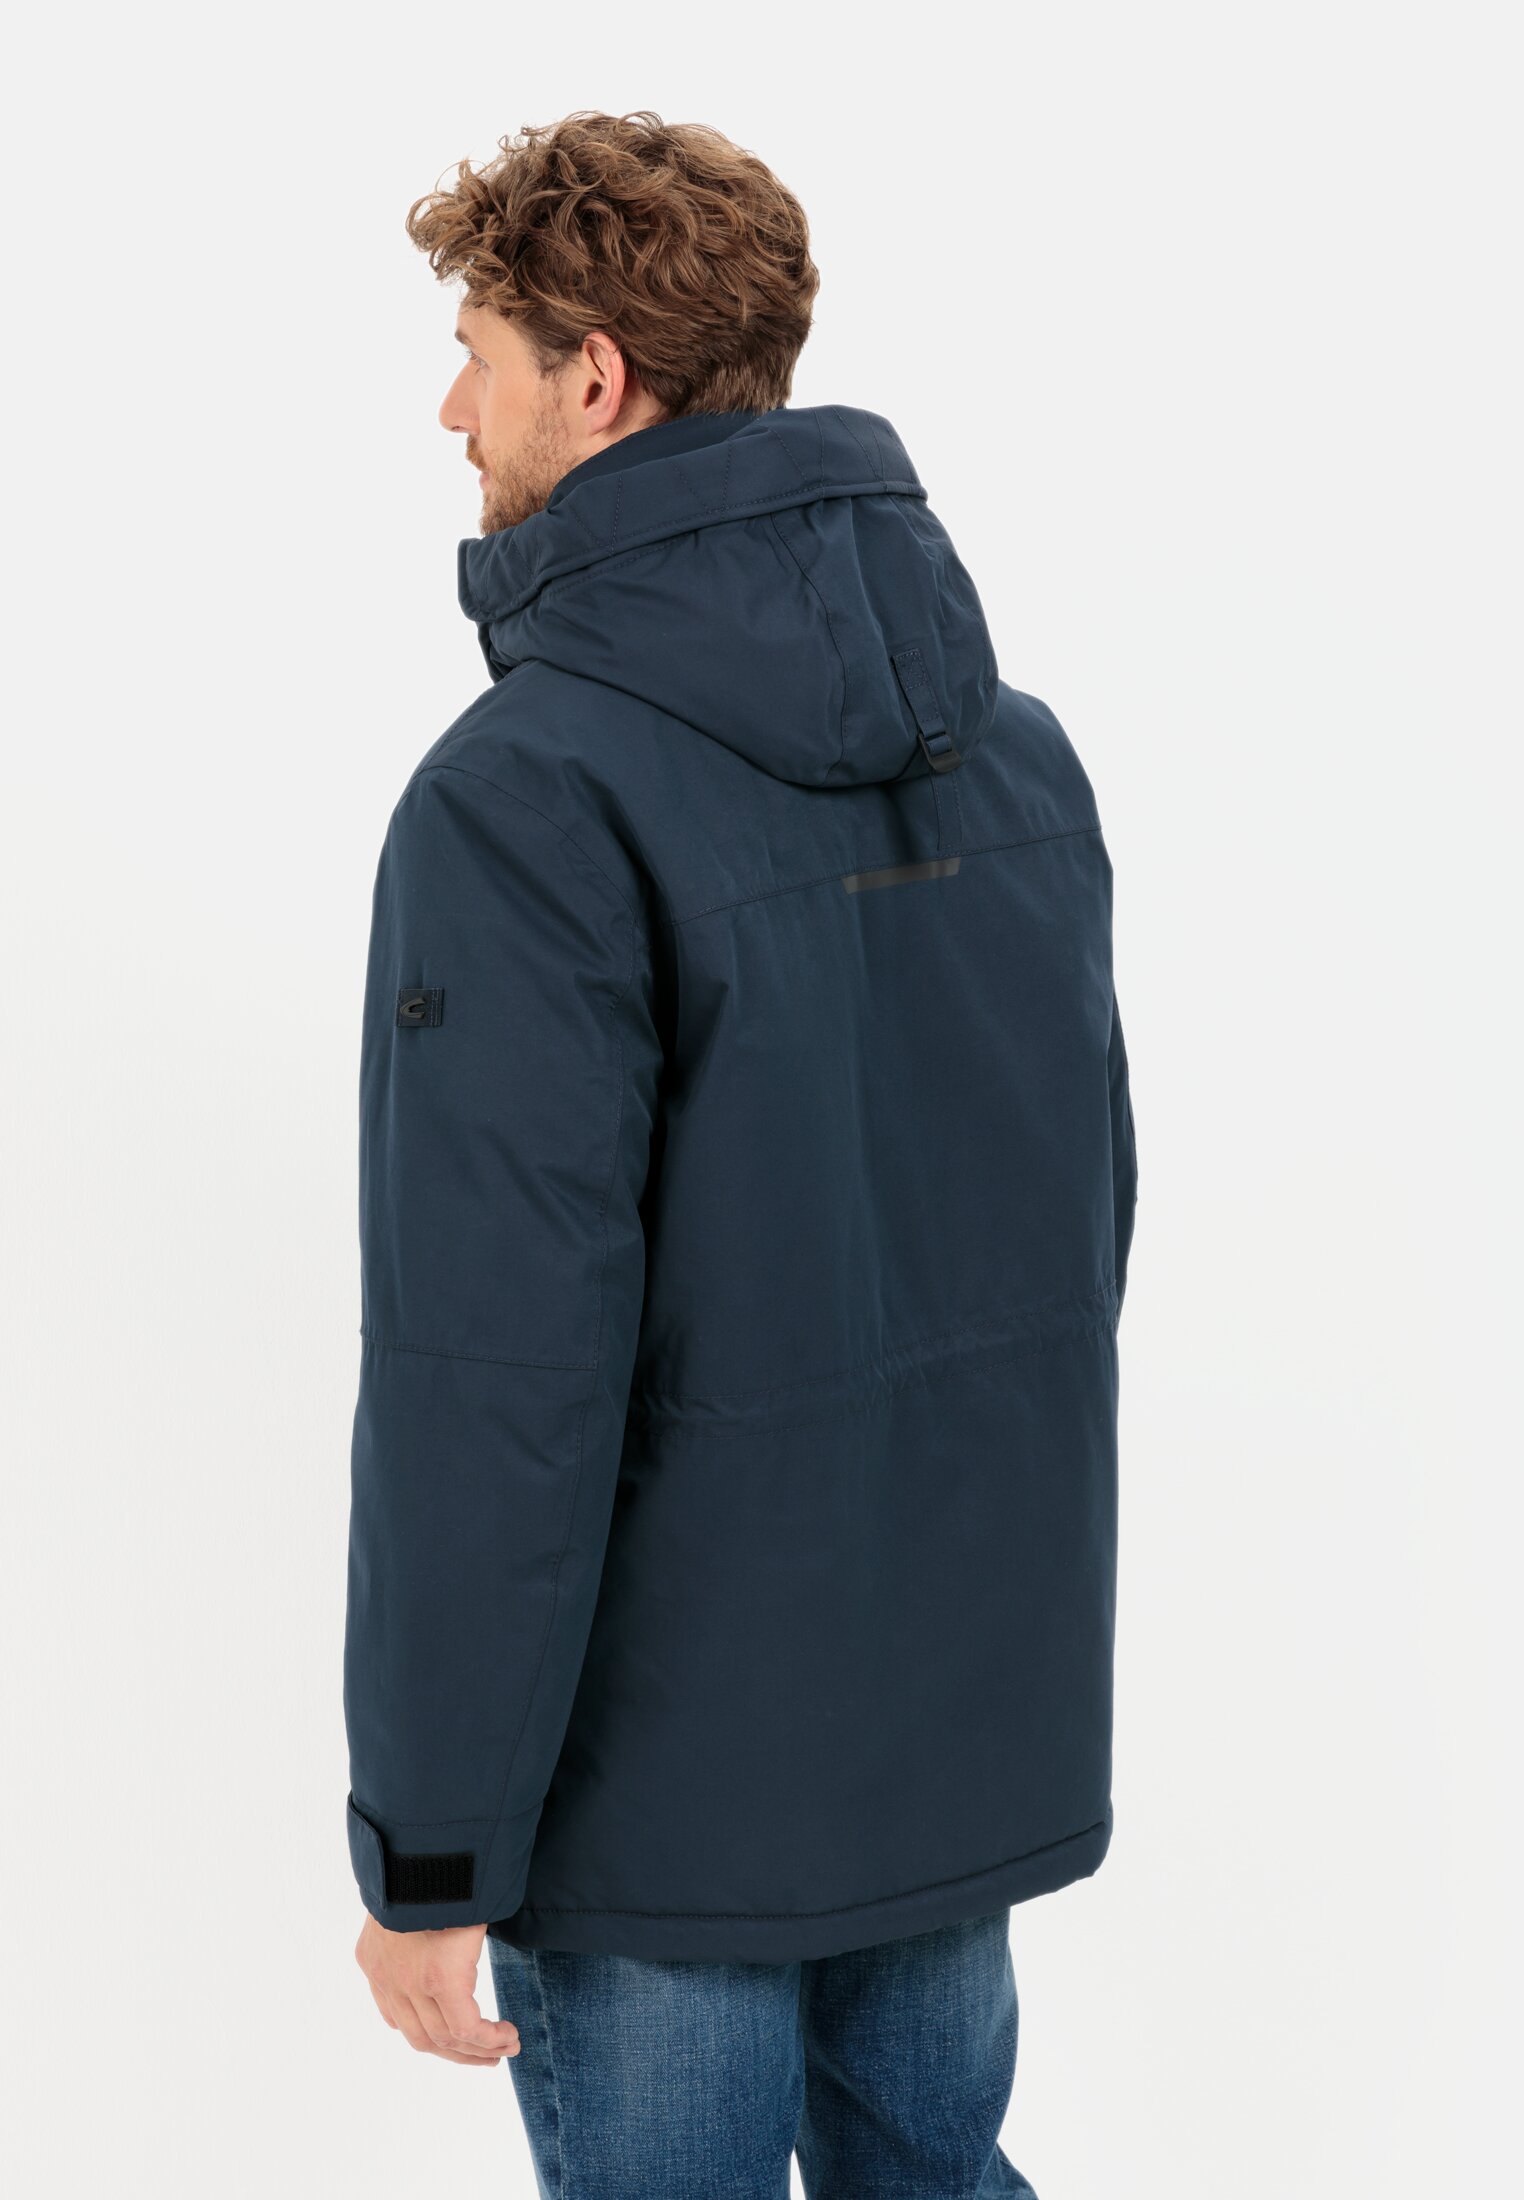 teXXXactive® jacket for Herren in Dark Blue | 50